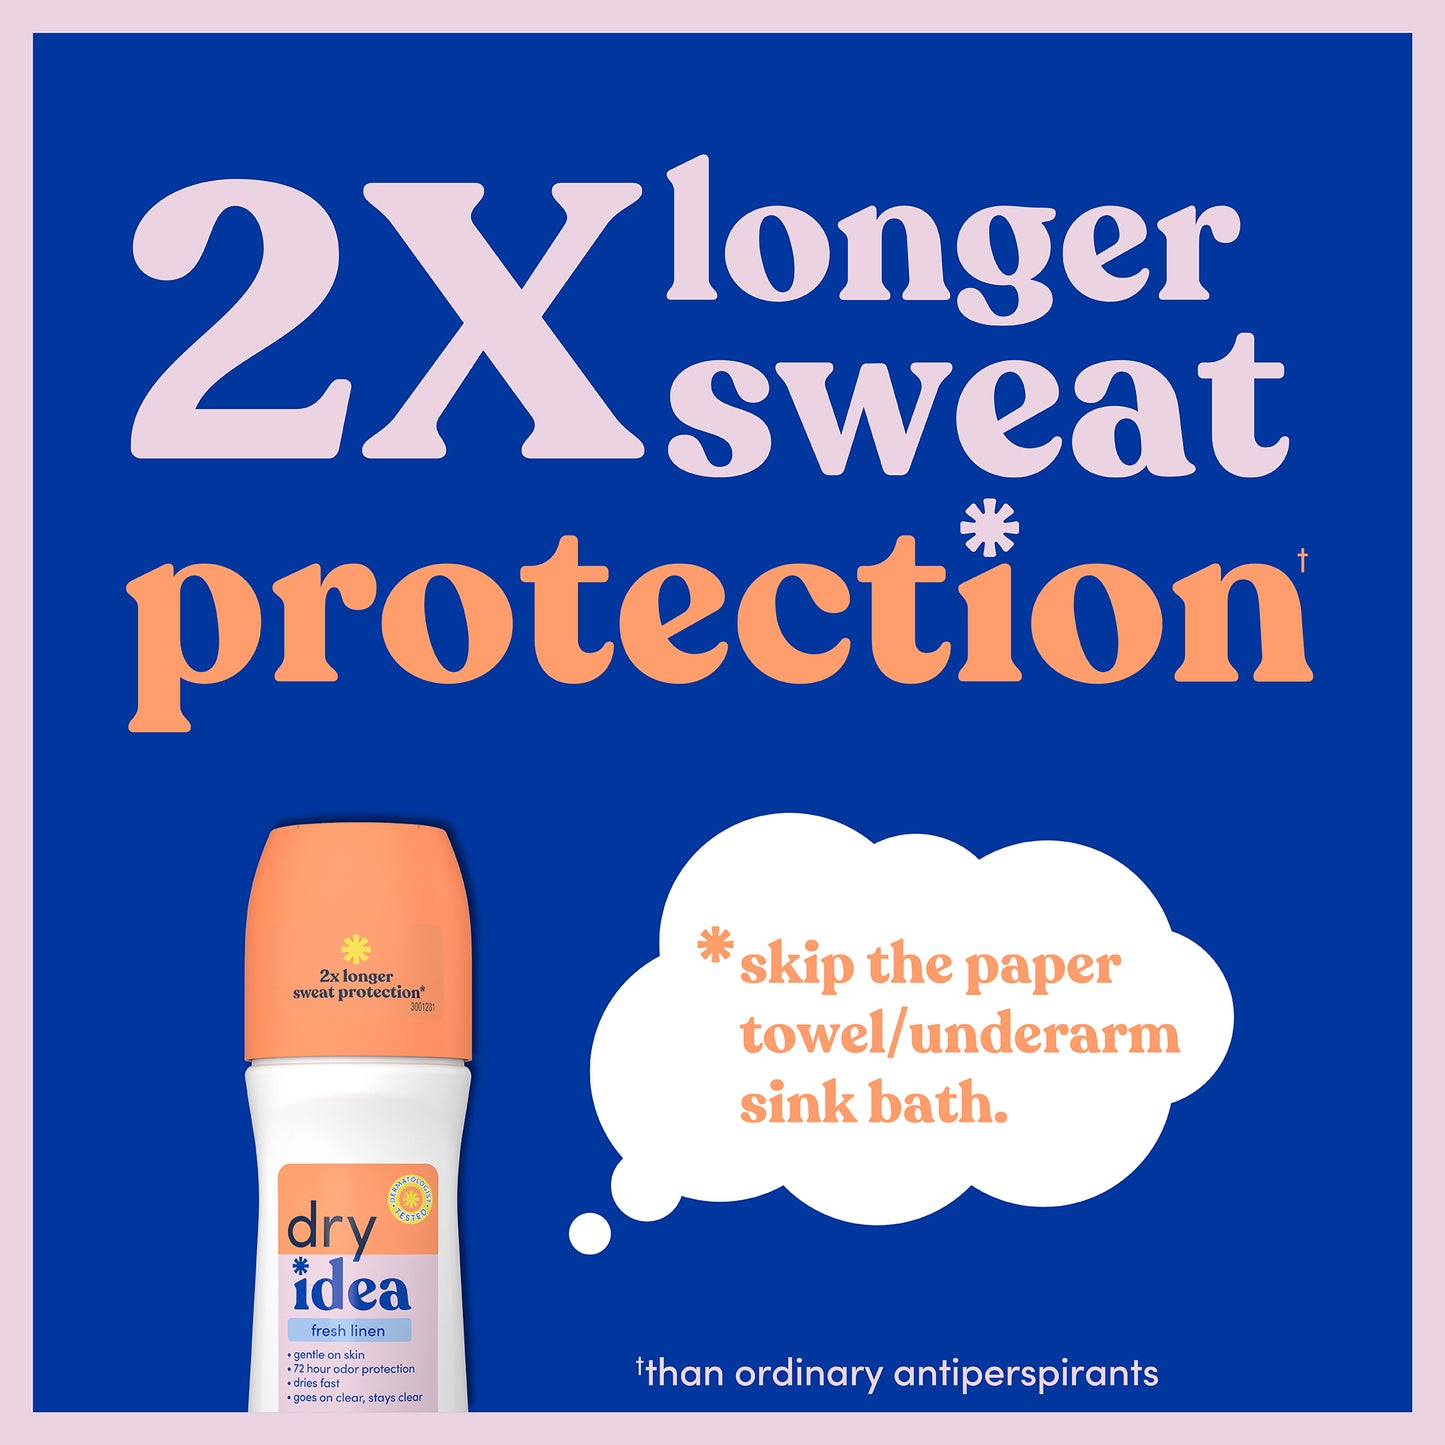 2x longer sweat protection